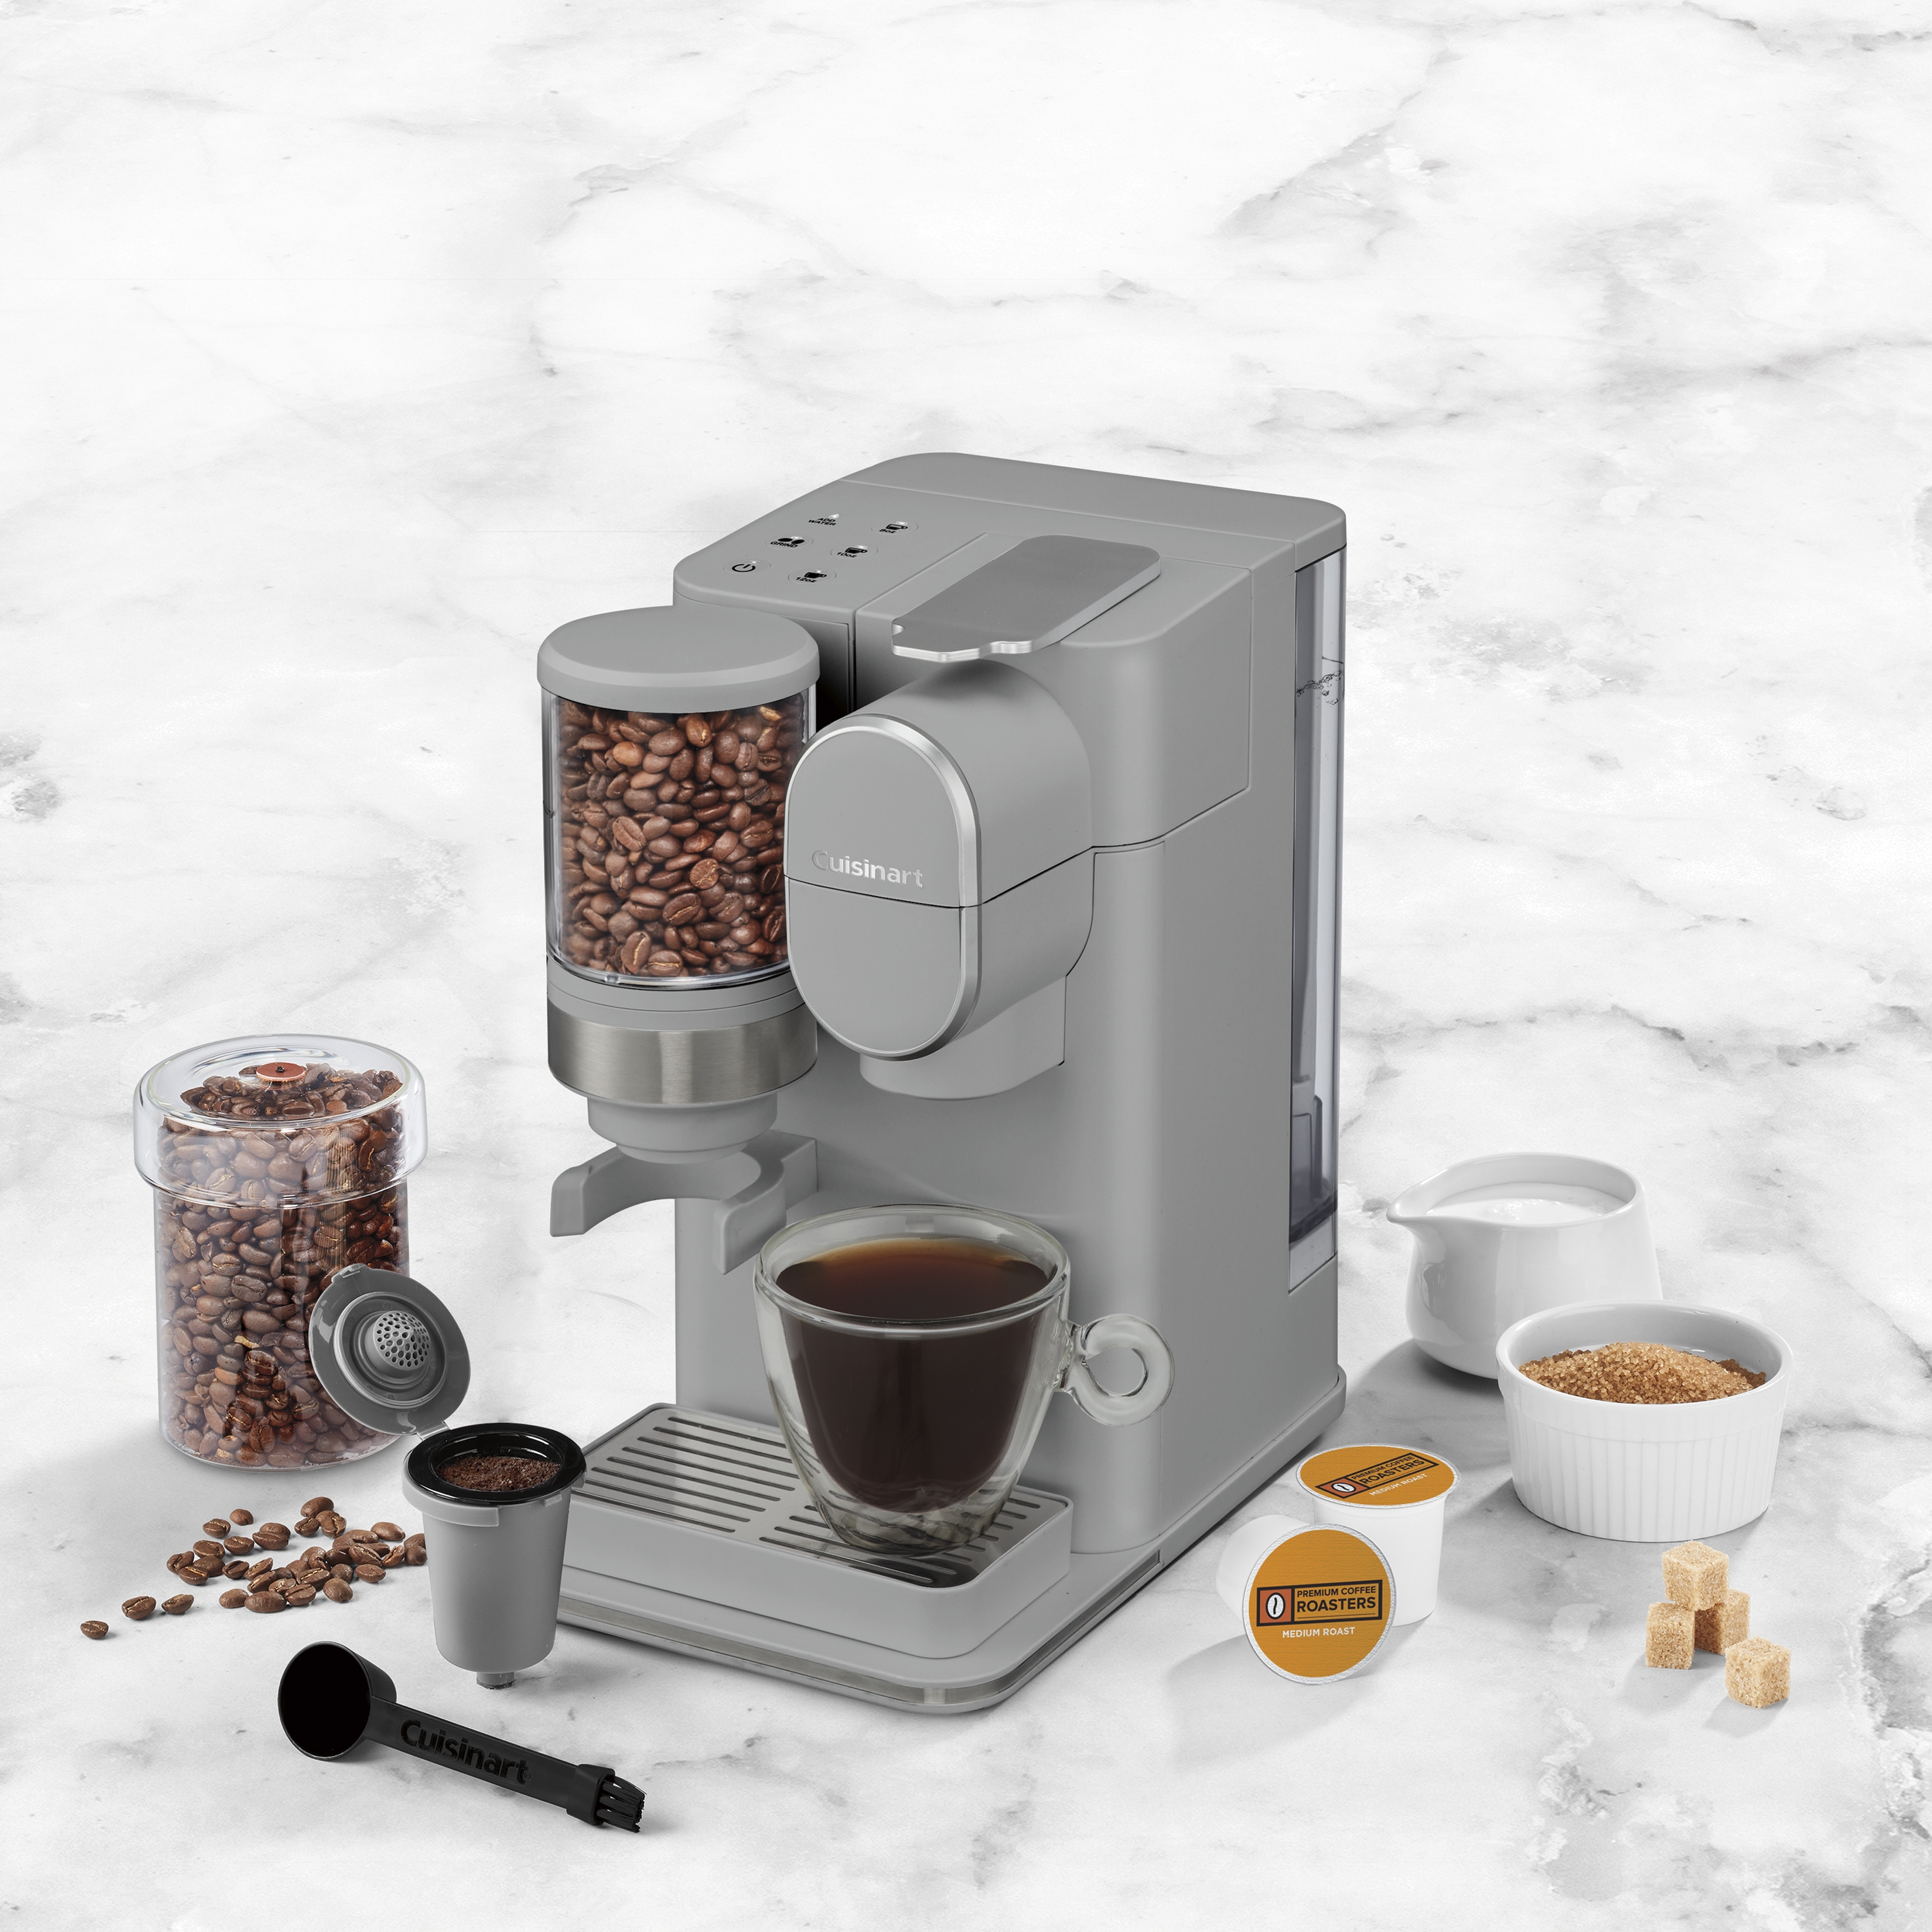 Cuisinart DGB-2 Grind & Brew Single-Serve Coffeemaker